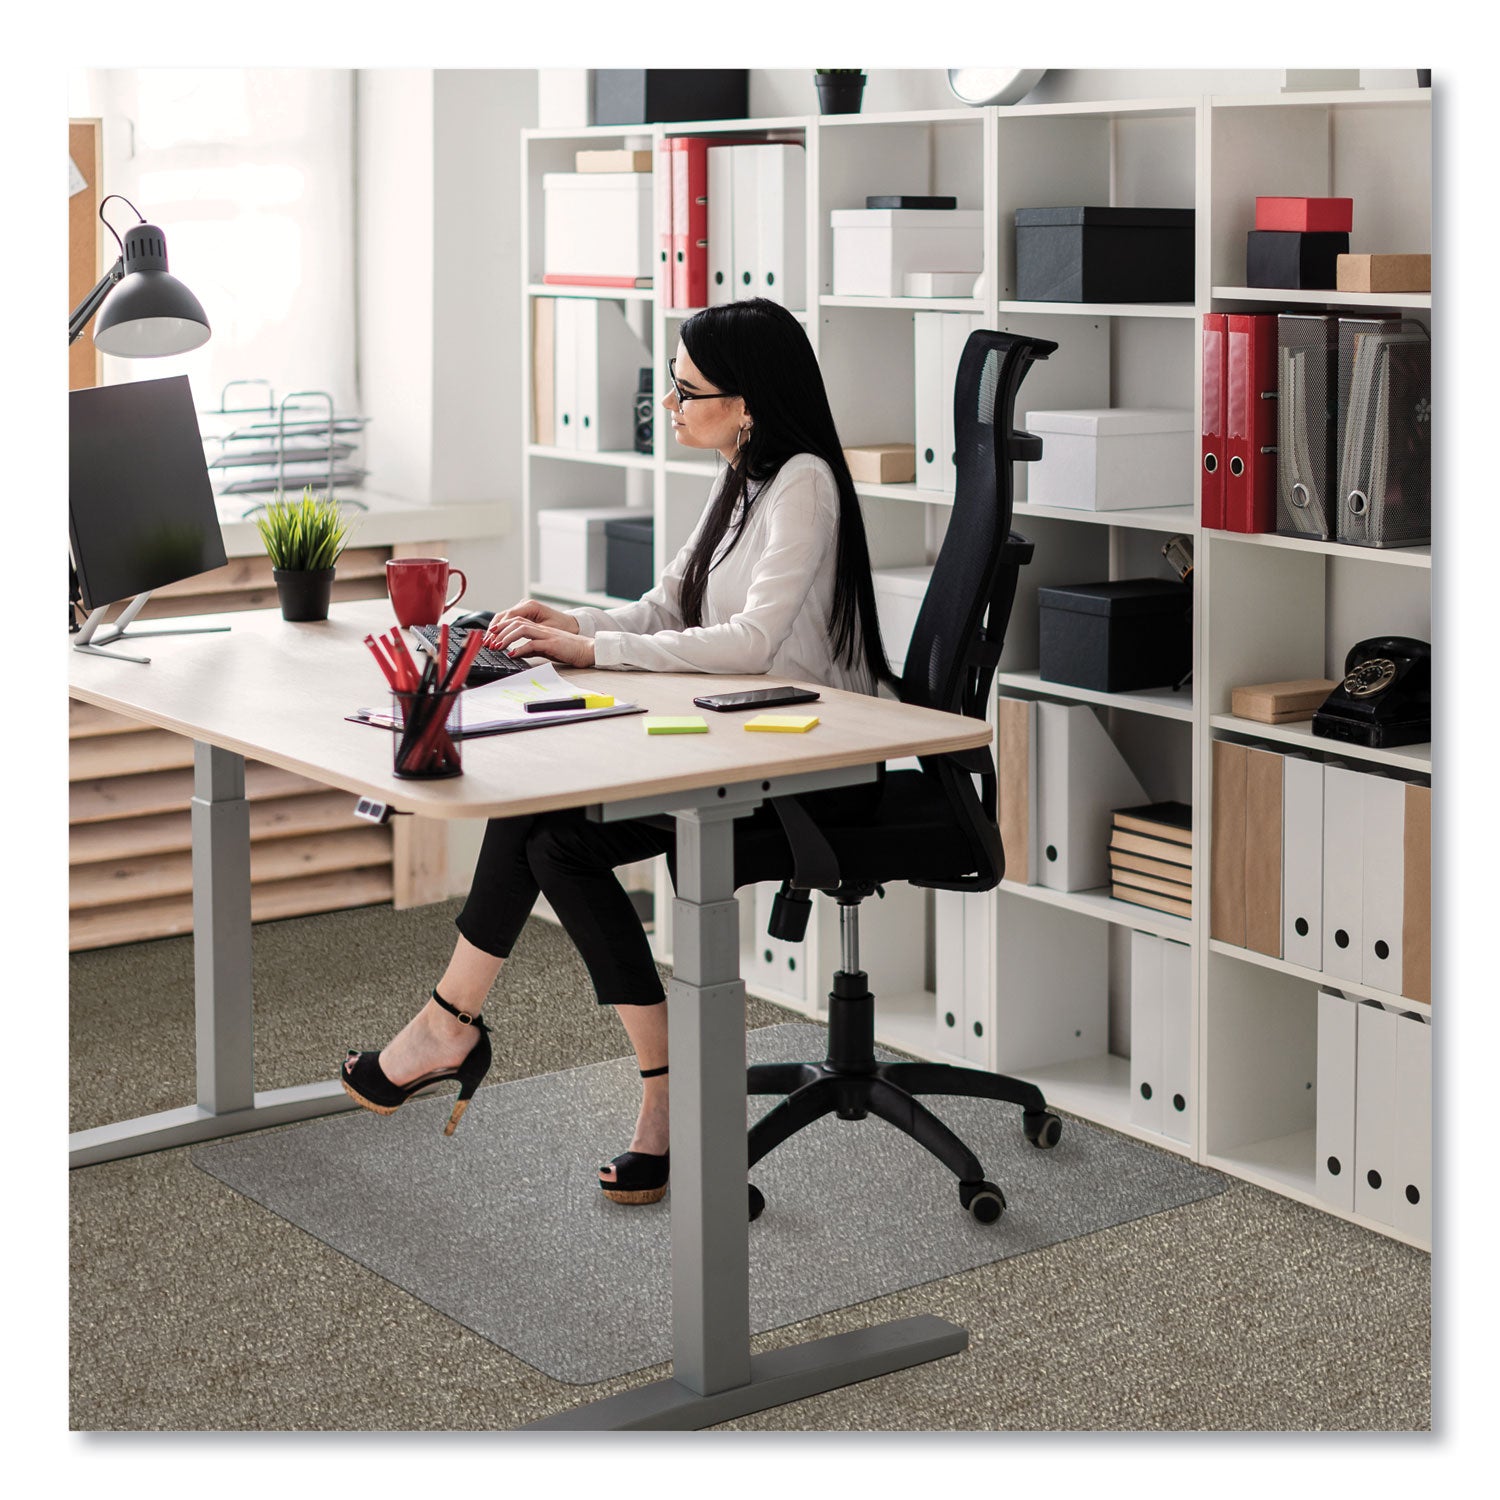 cleartex-ultimat-polycarbonate-chair-mat-for-low-medium-pile-carpet-48-x-53-clear_flrer1113423er - 1